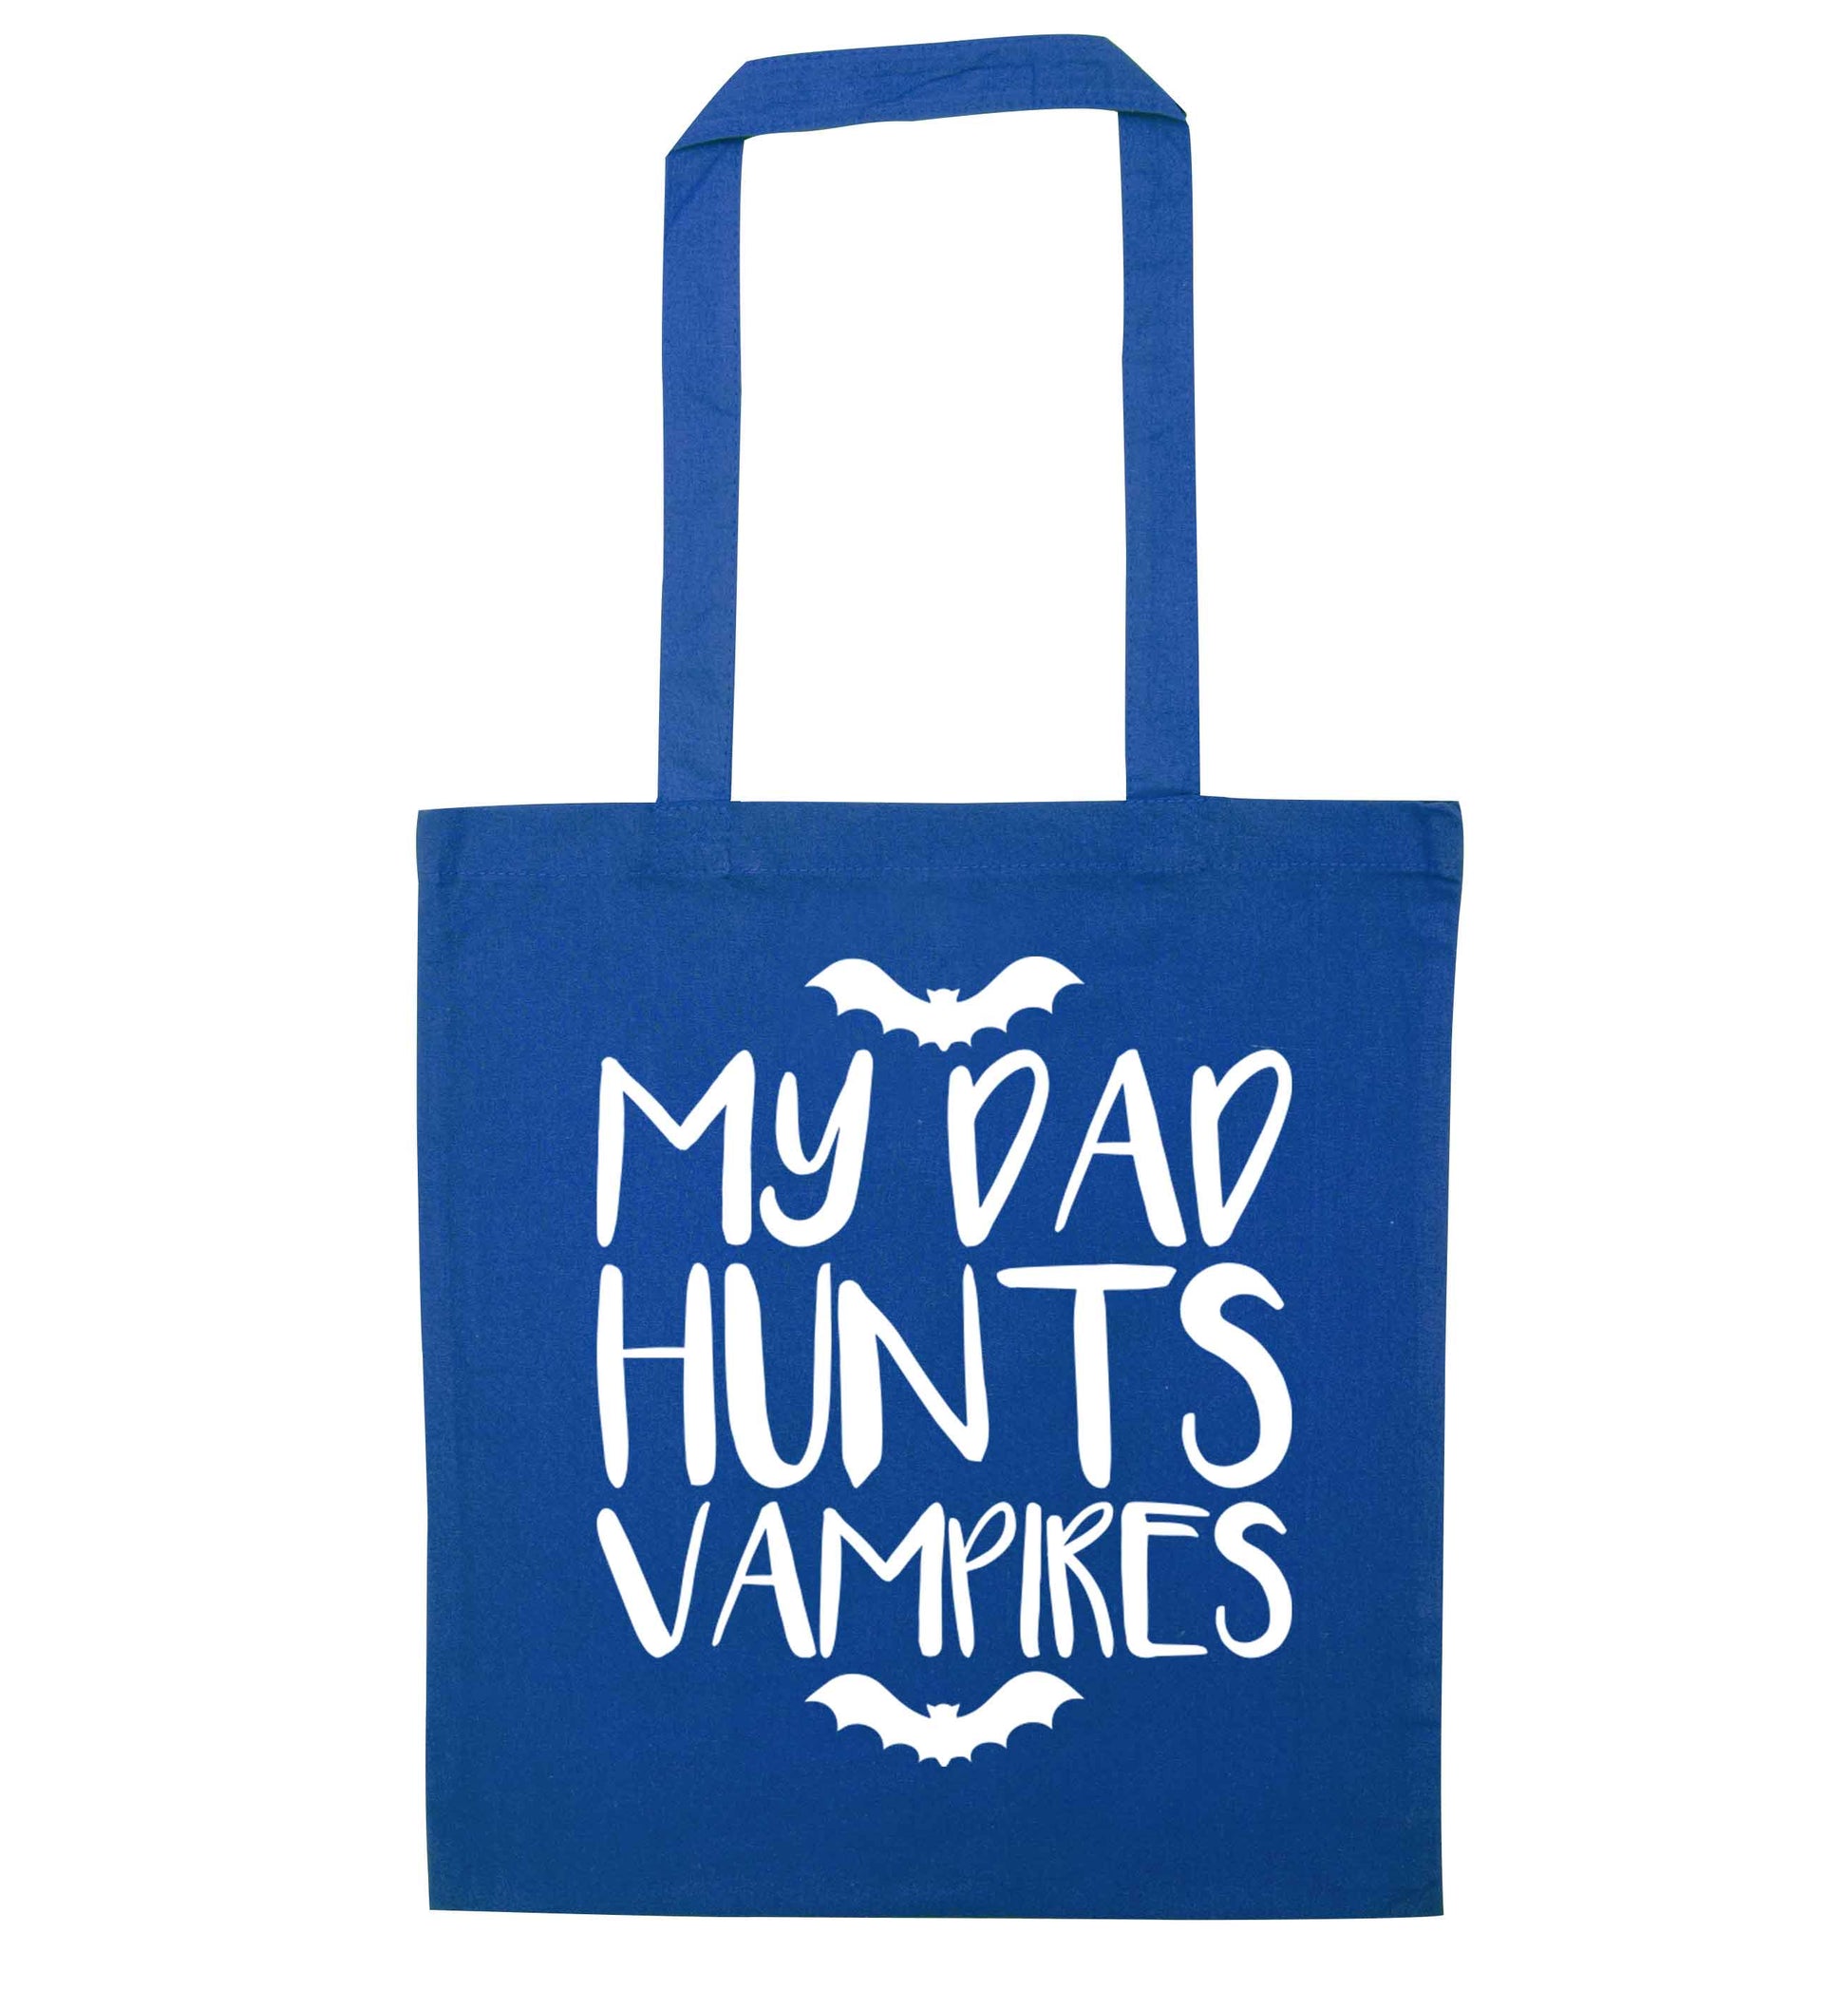 My dad hunts vampires blue tote bag